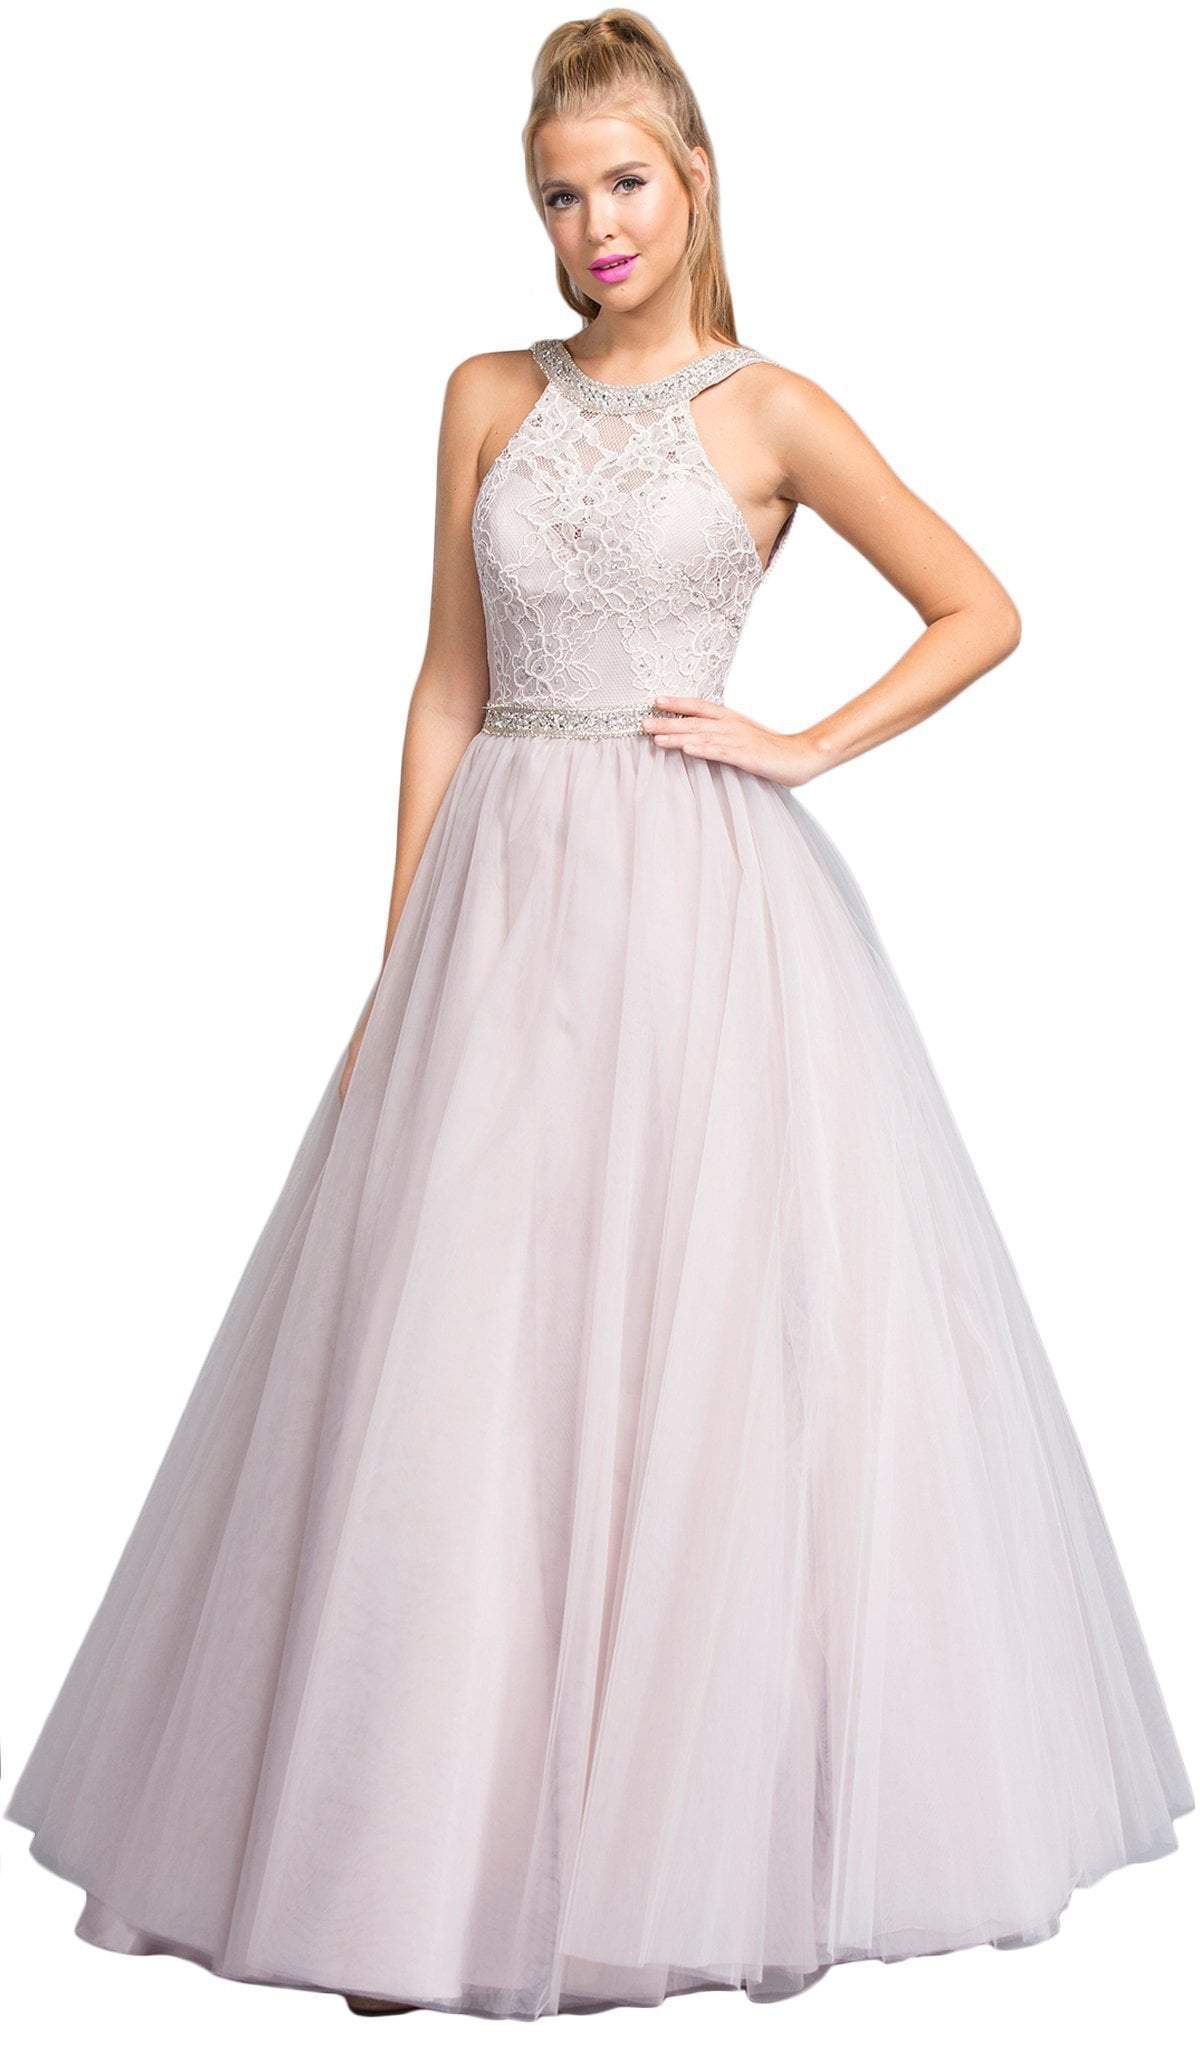 Aspeed Design - Jeweled Lace Halter Prom Ballgown
